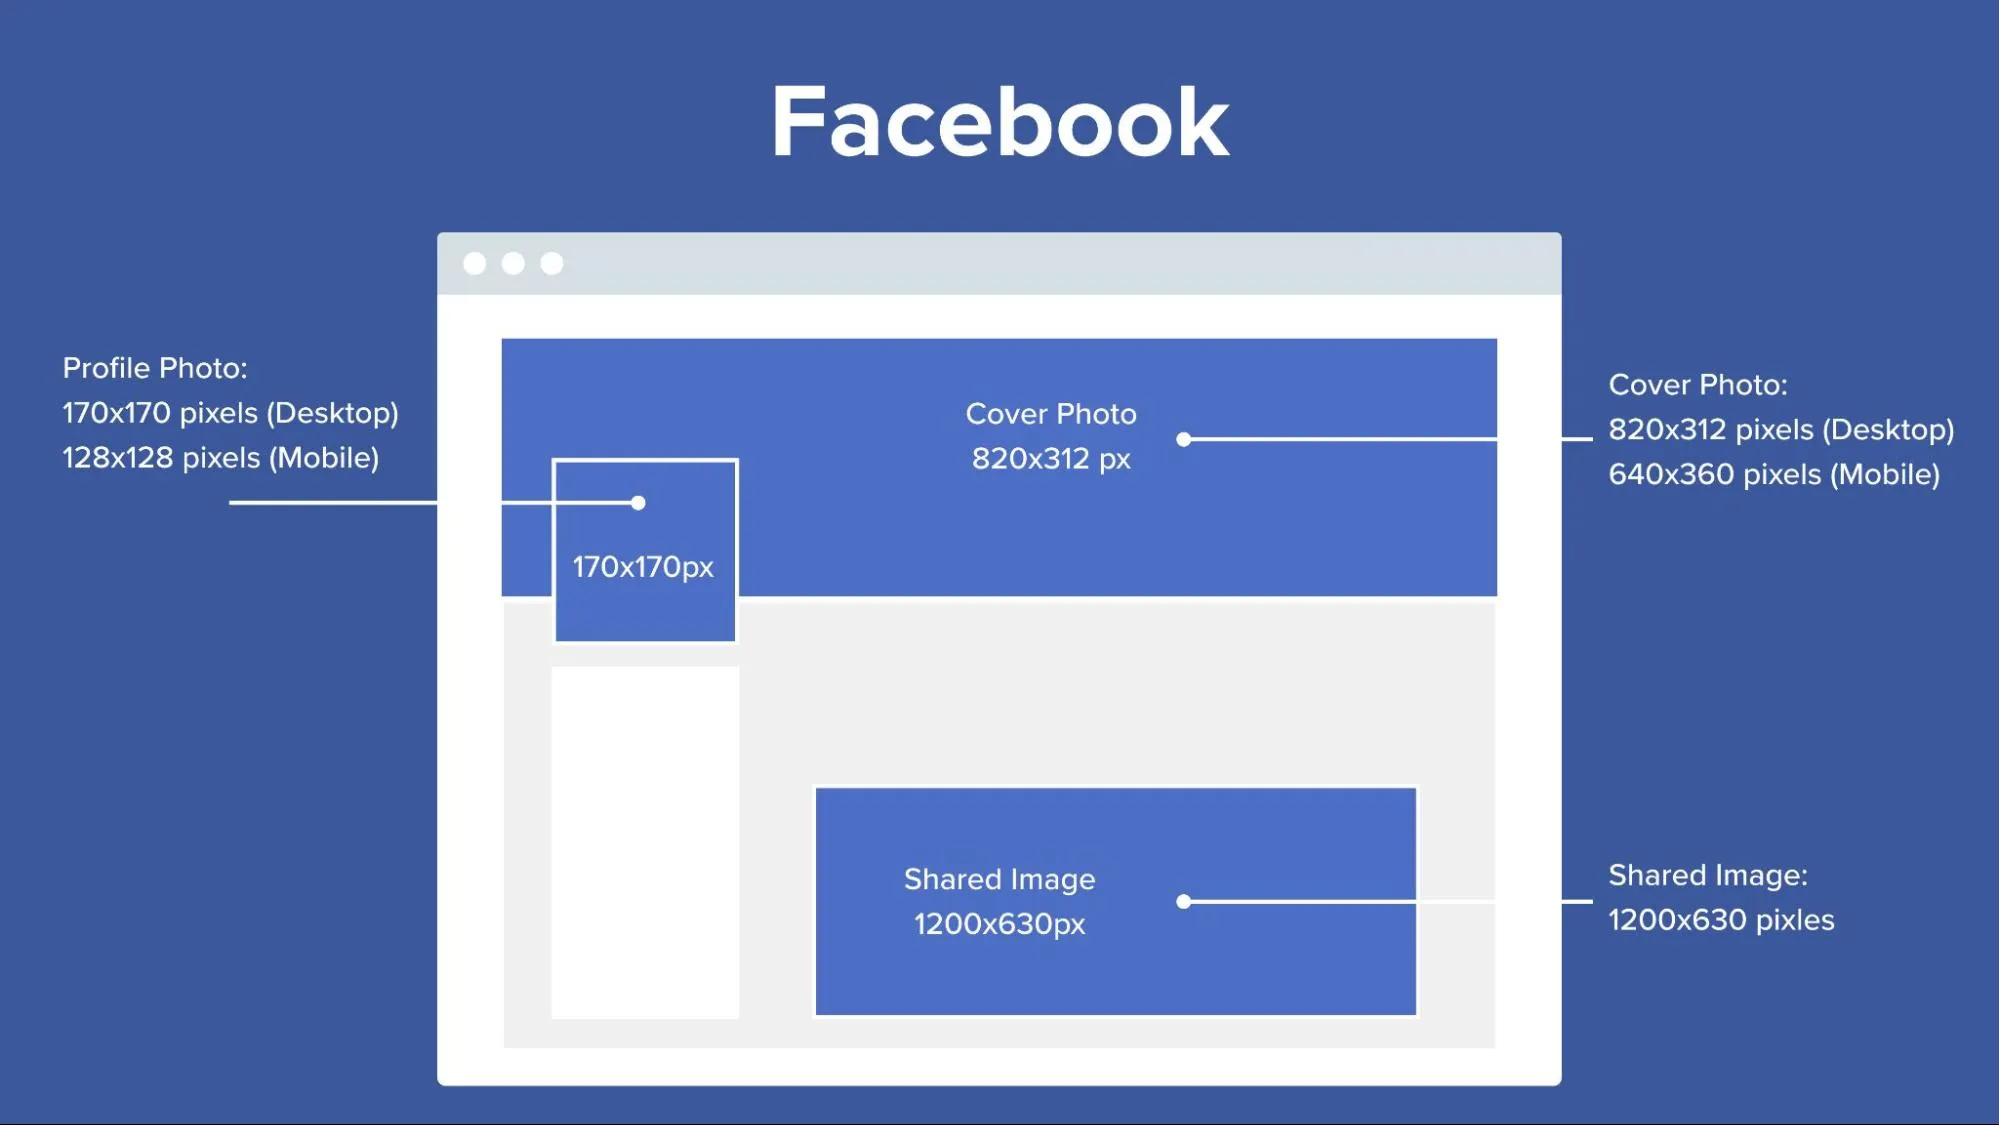 Facebook image sizes